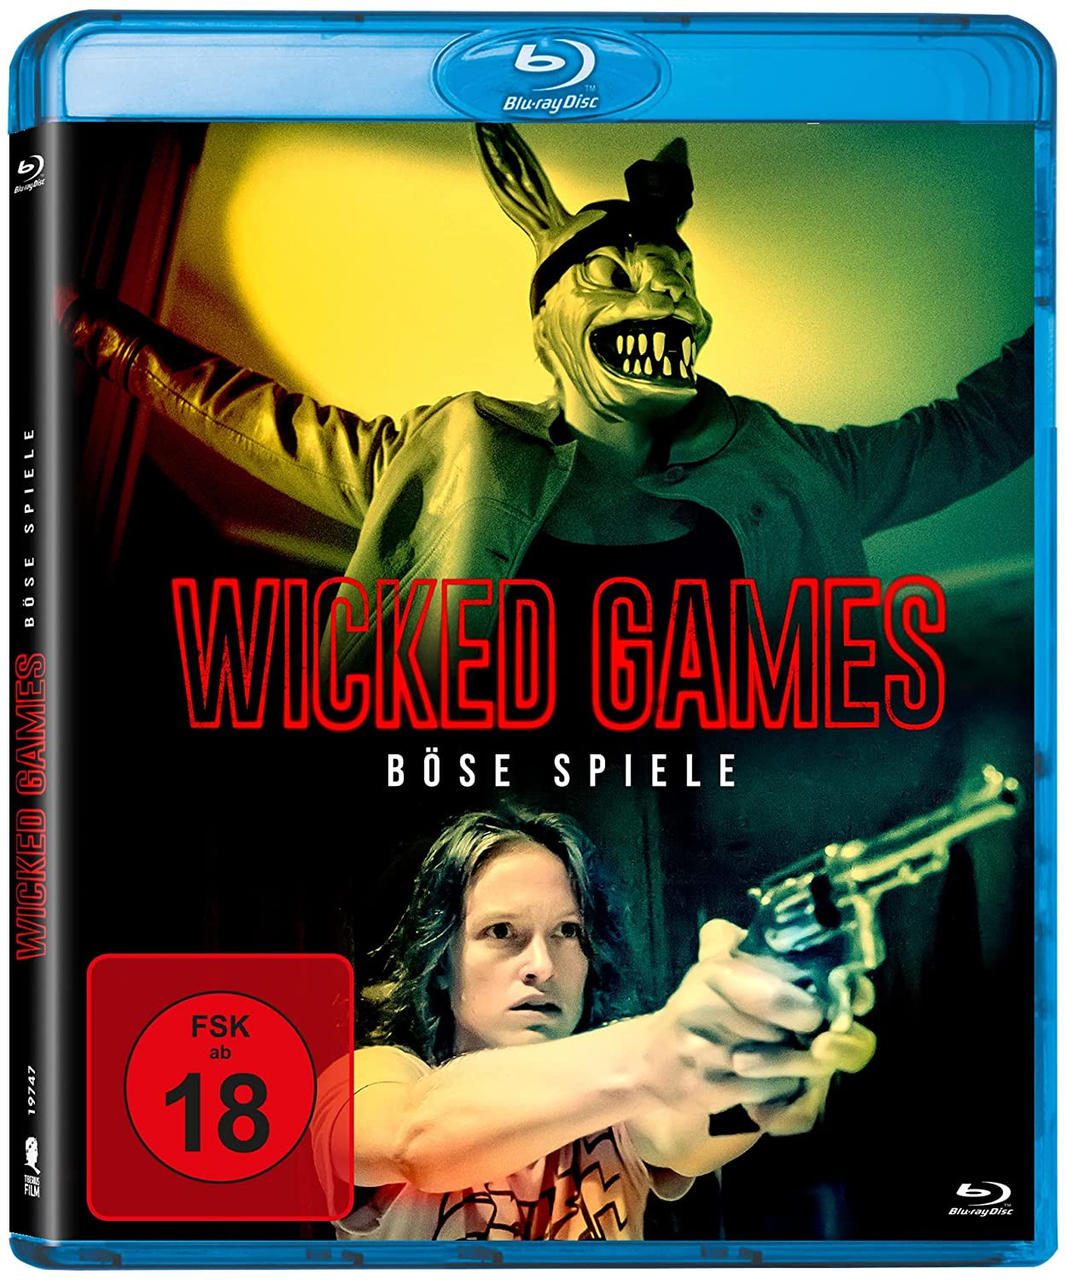 Blu-ray Spiele Wicked Games-Böse